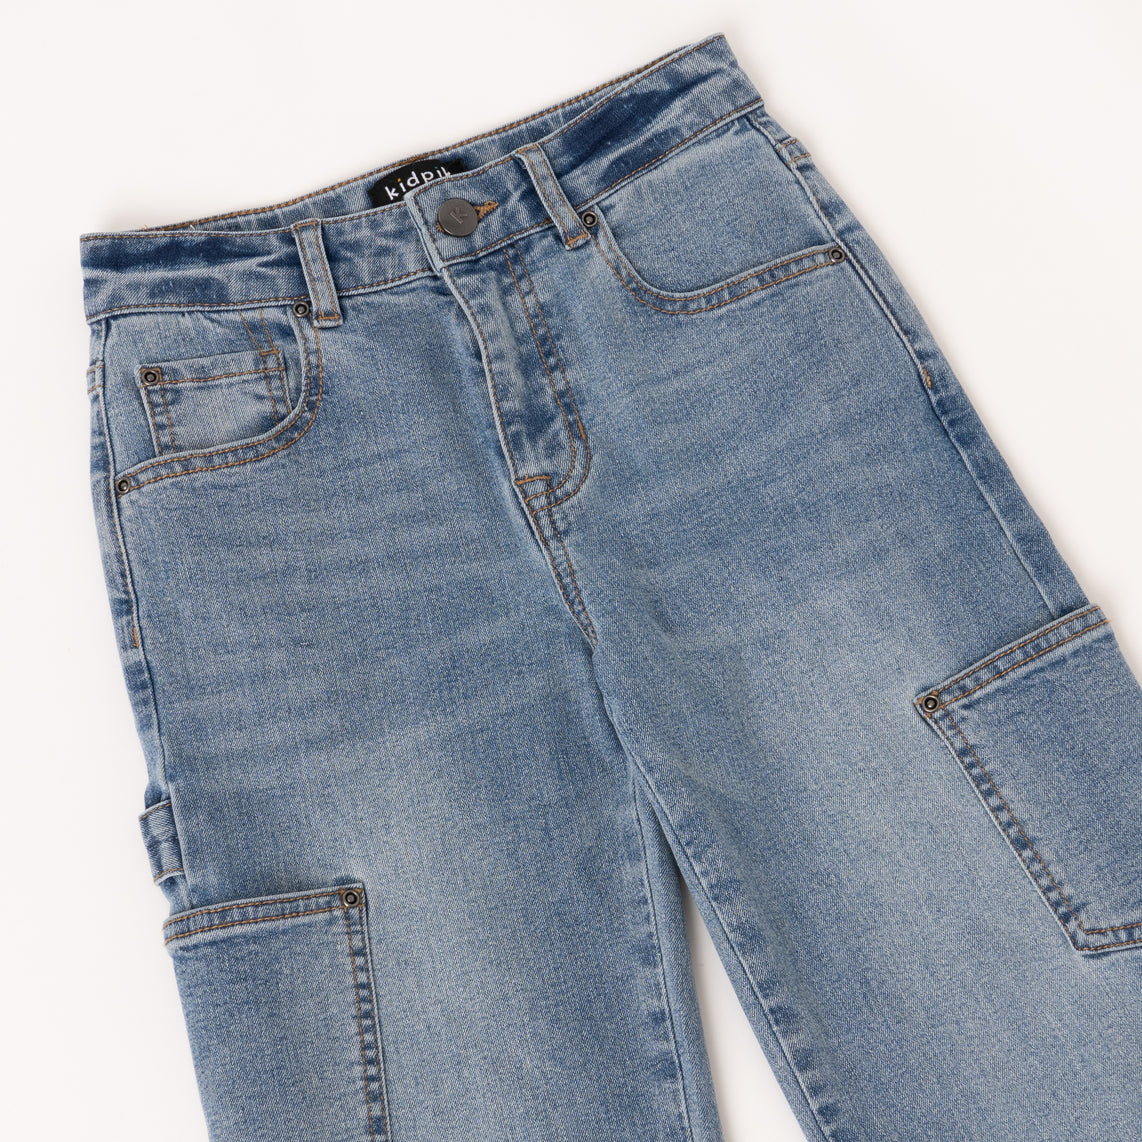 – Wide Girls Leg Stretch Denim Size Jeans, KIDPIK Kidpik 16 Cargo